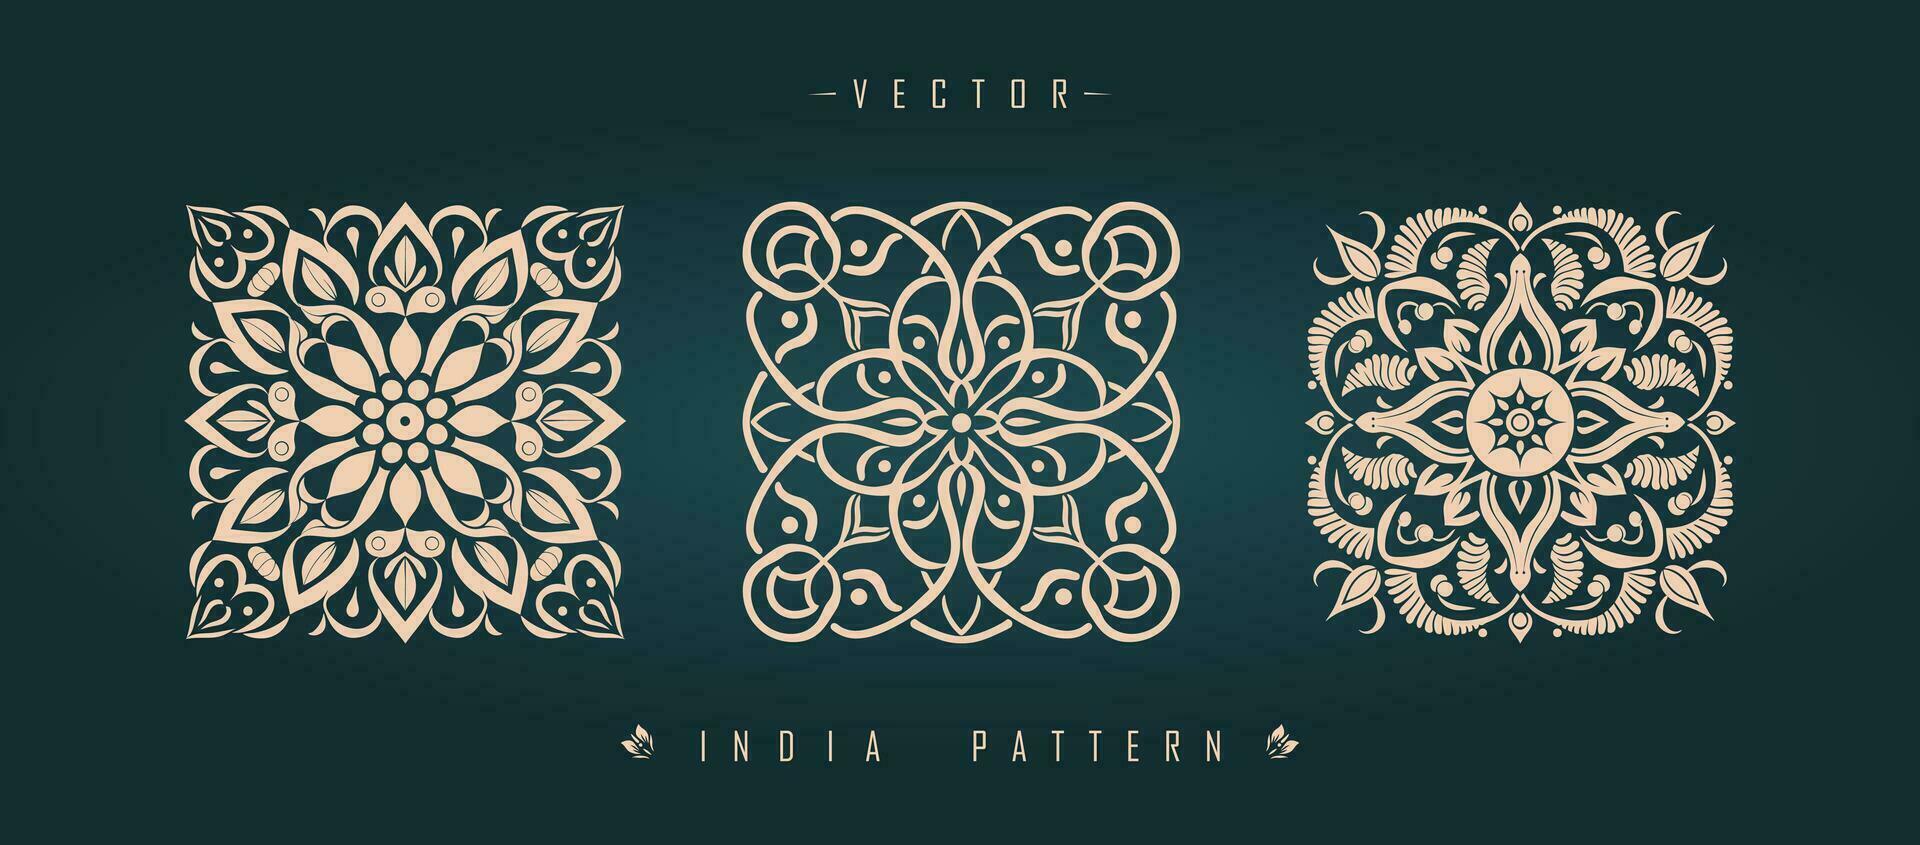 indisch traditionell Muster asiatisch Muster vektor